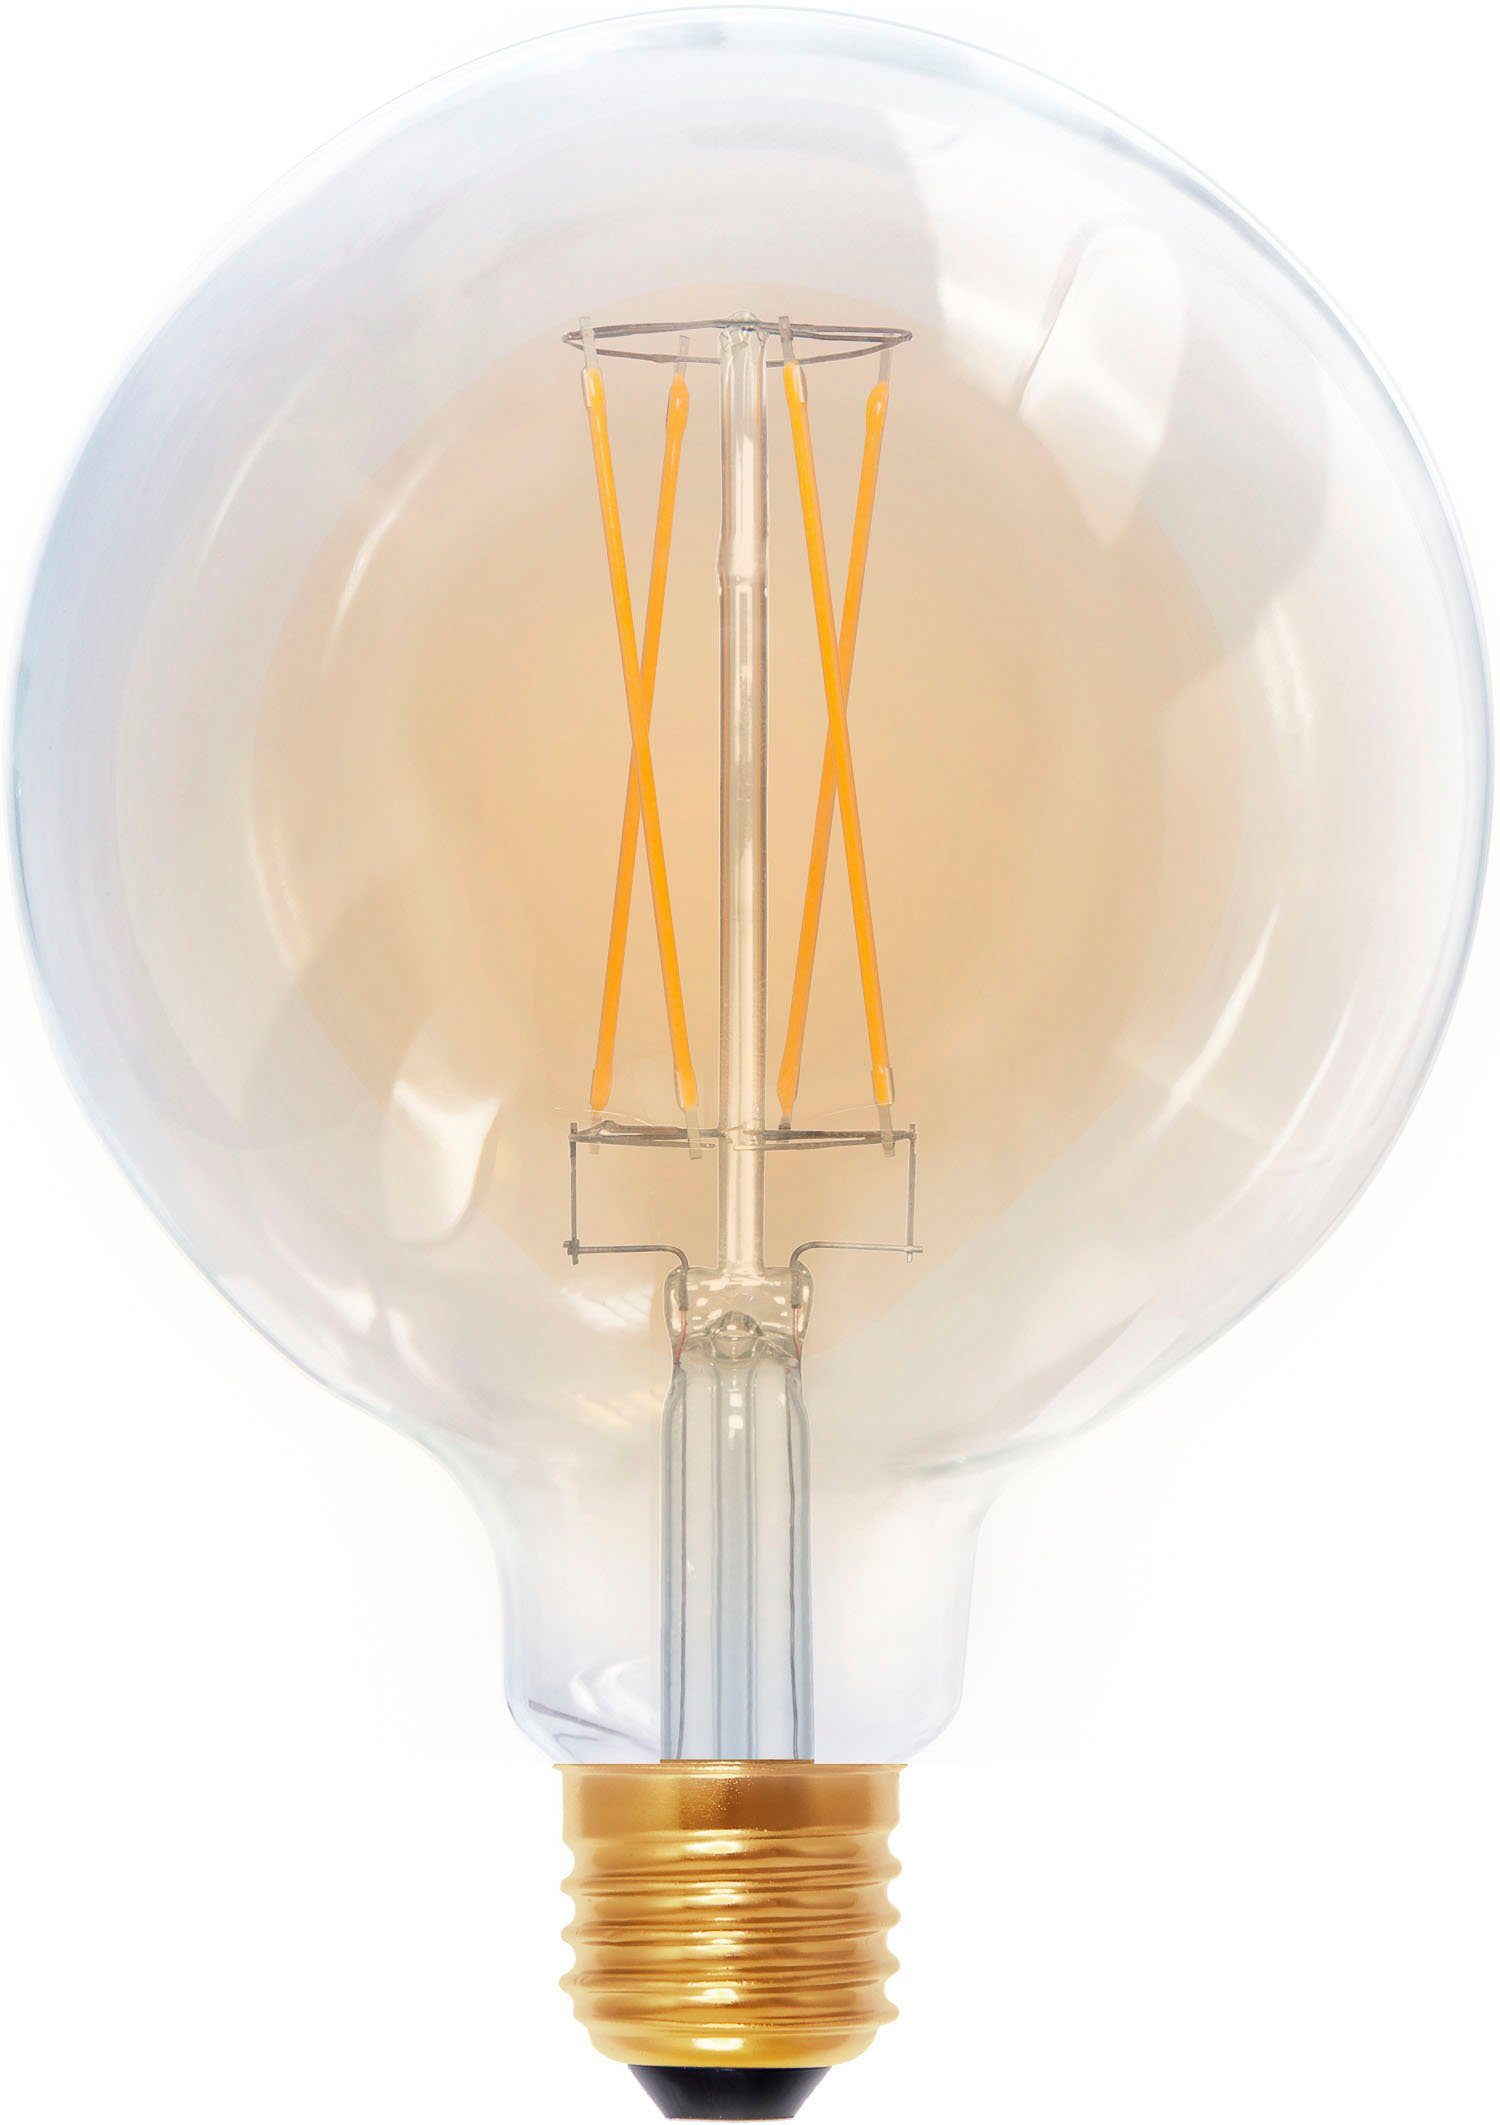 SEGULA LED-Leuchtmittel LED Globe 125 gold, E27, 1 St., Extra-Warmweiß, LED Globe 125 gold, E27, 5W, CRI 90, dimmbar | Leuchtmittel